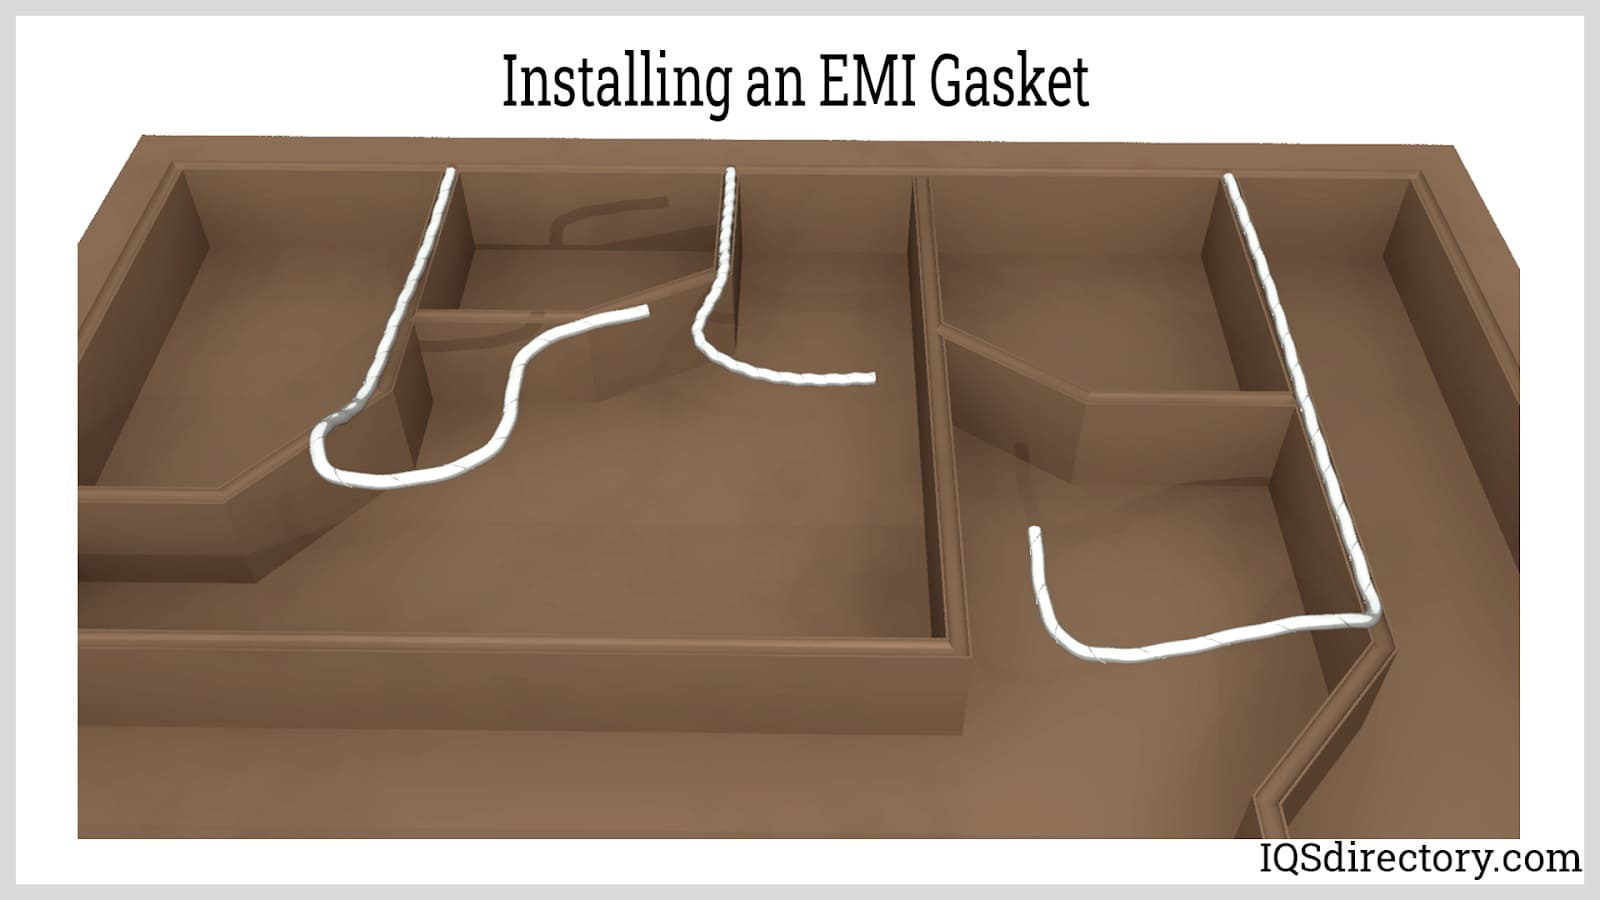 An EMI gasket